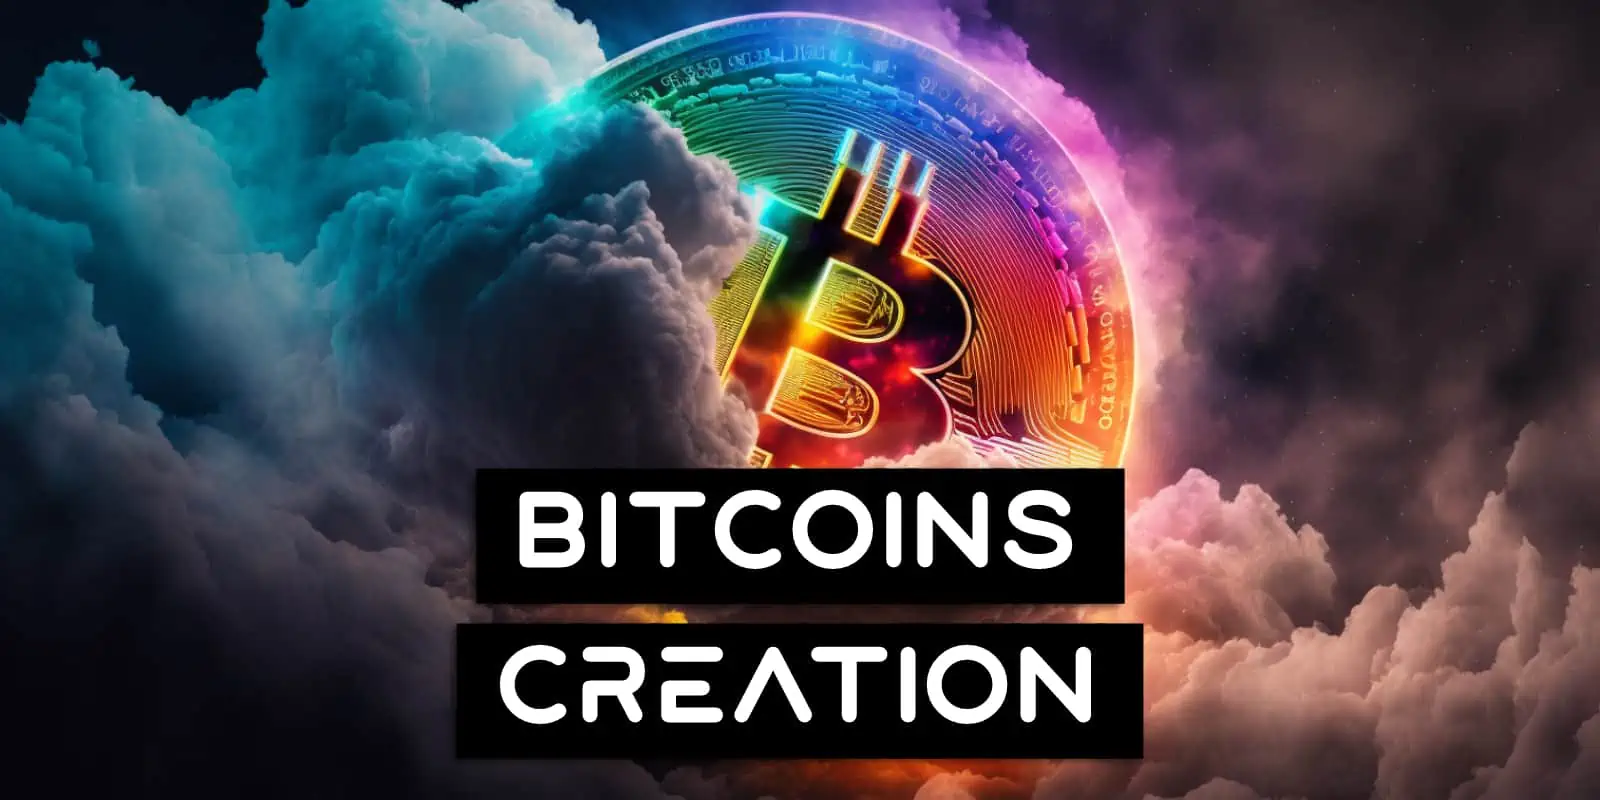 Why Was Bitcoin Created